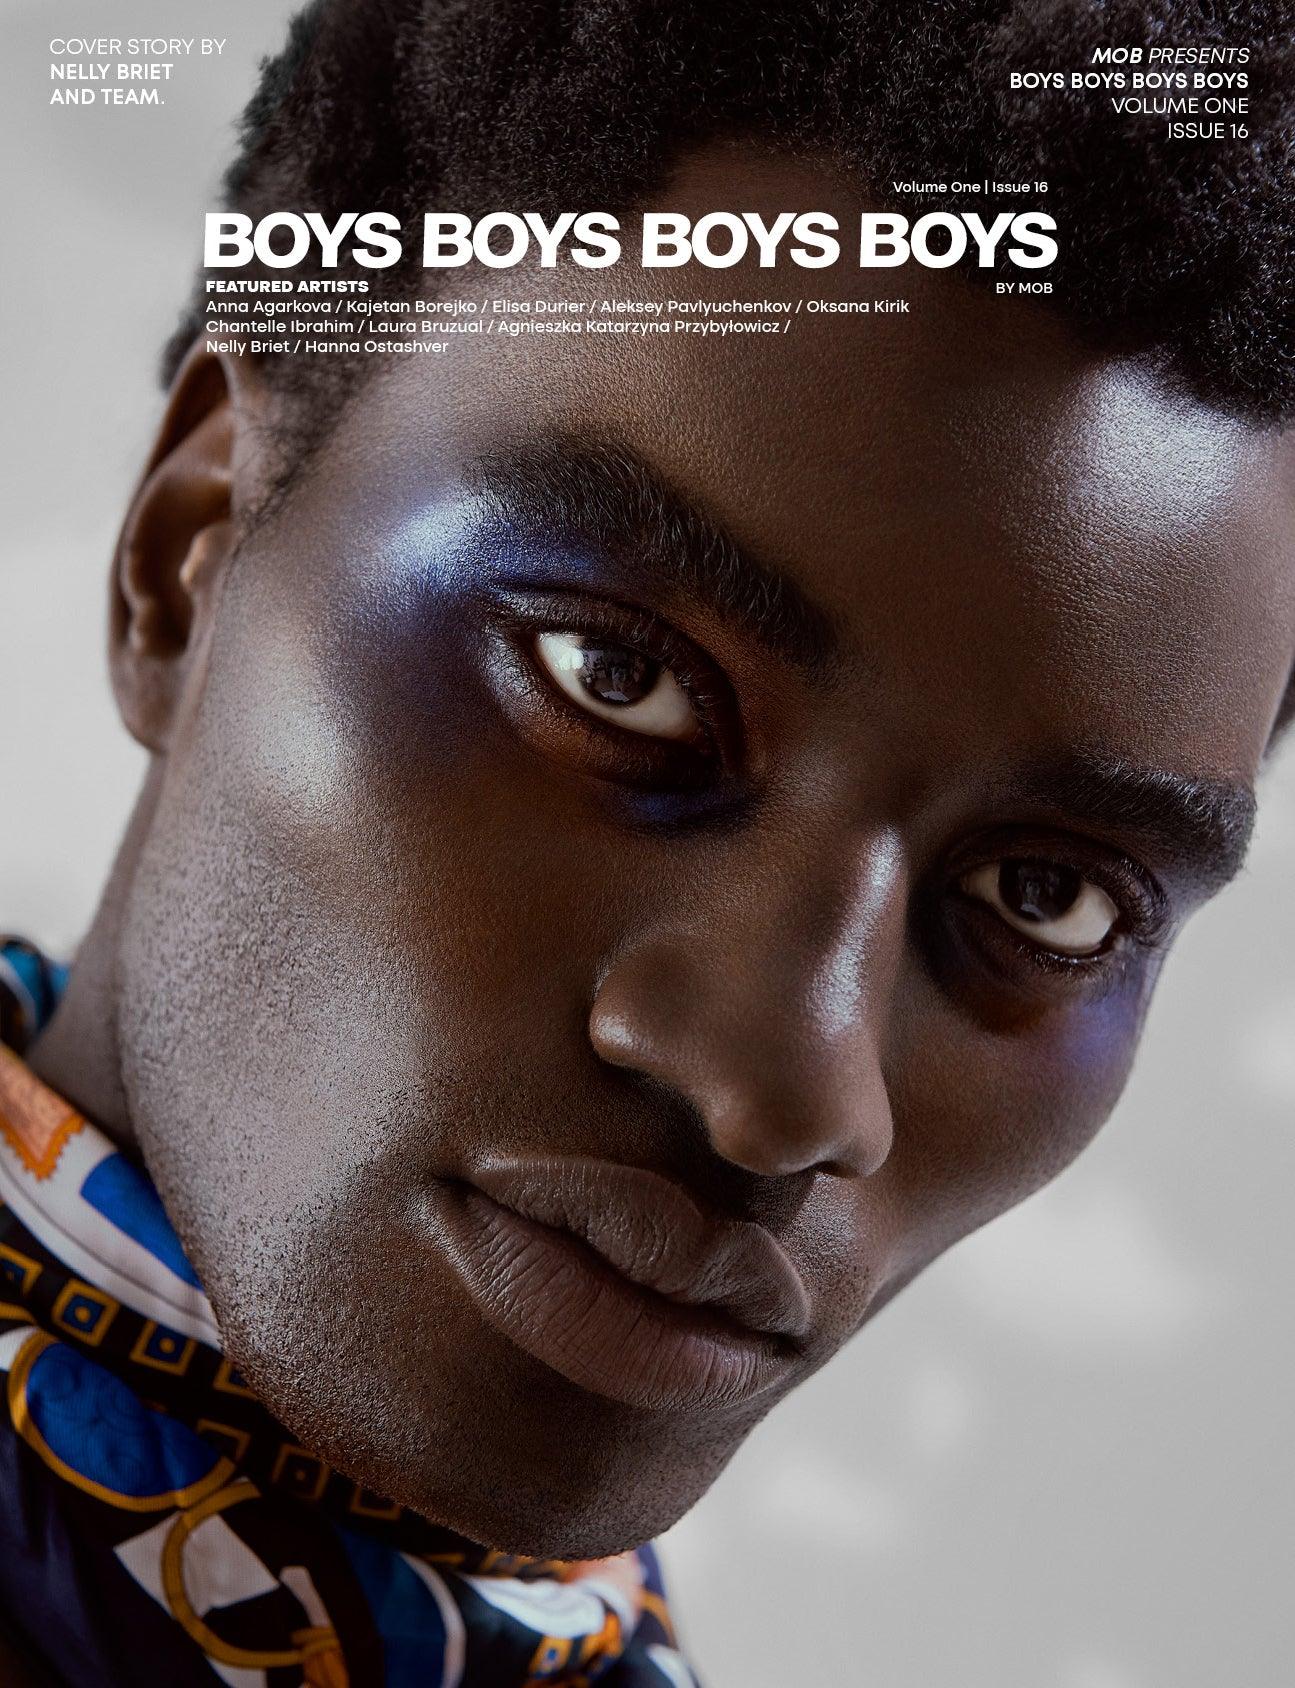 BOYS BOYS BOYS BOYS | VOLUME ONE | ISSUE #16 - Mob Journal